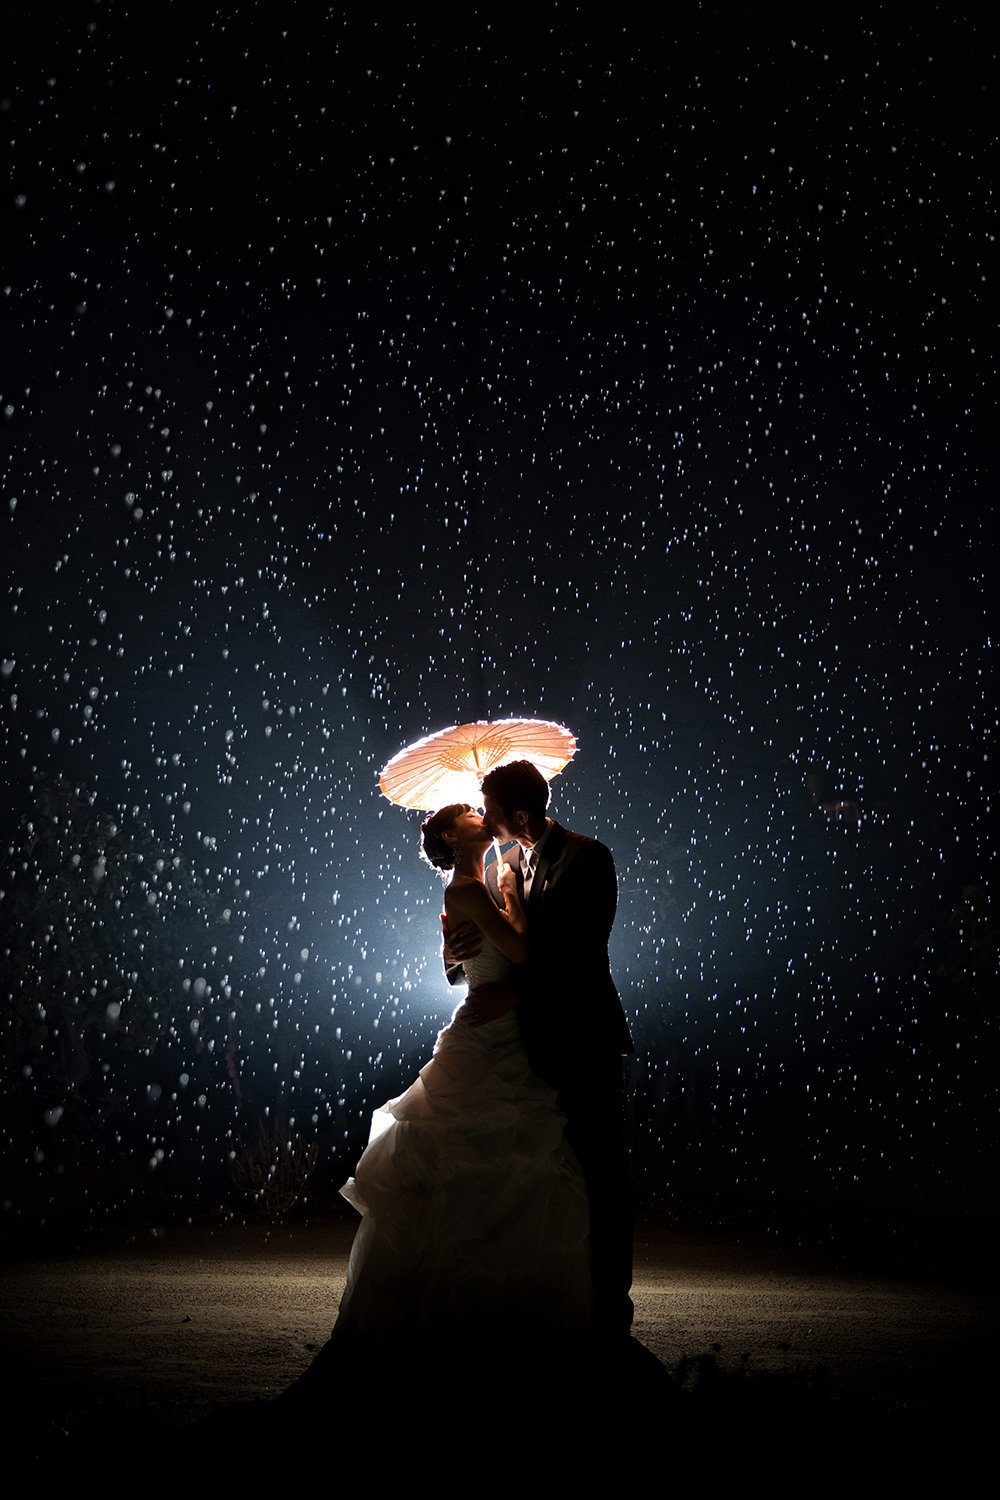 Temecula wedding photos  stunning night shot with rain